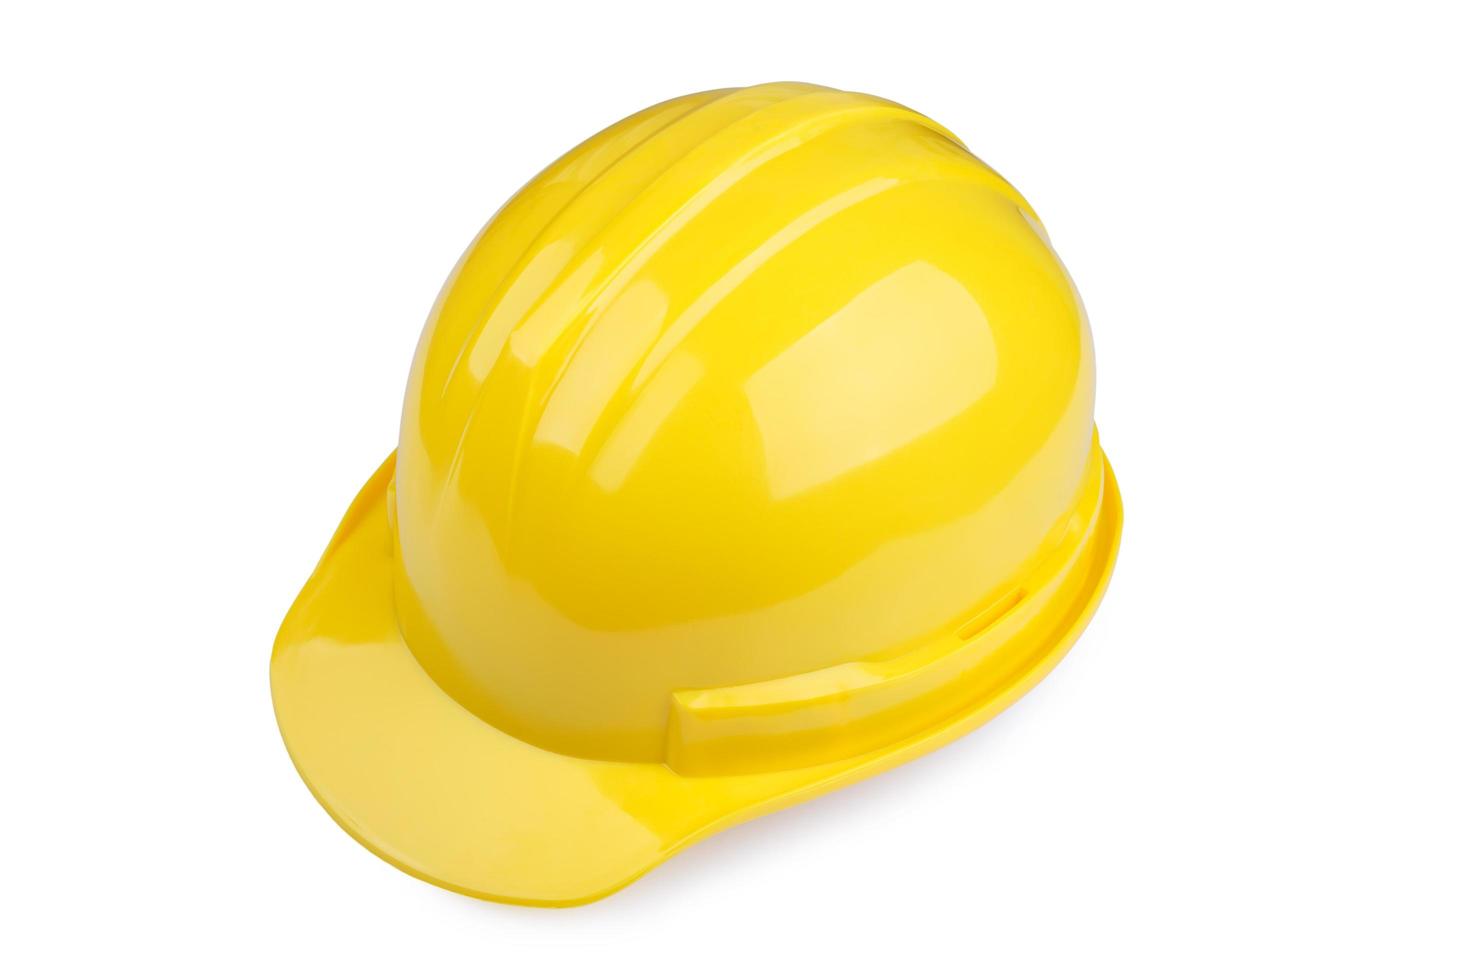 Yellow safety helmet on white background photo